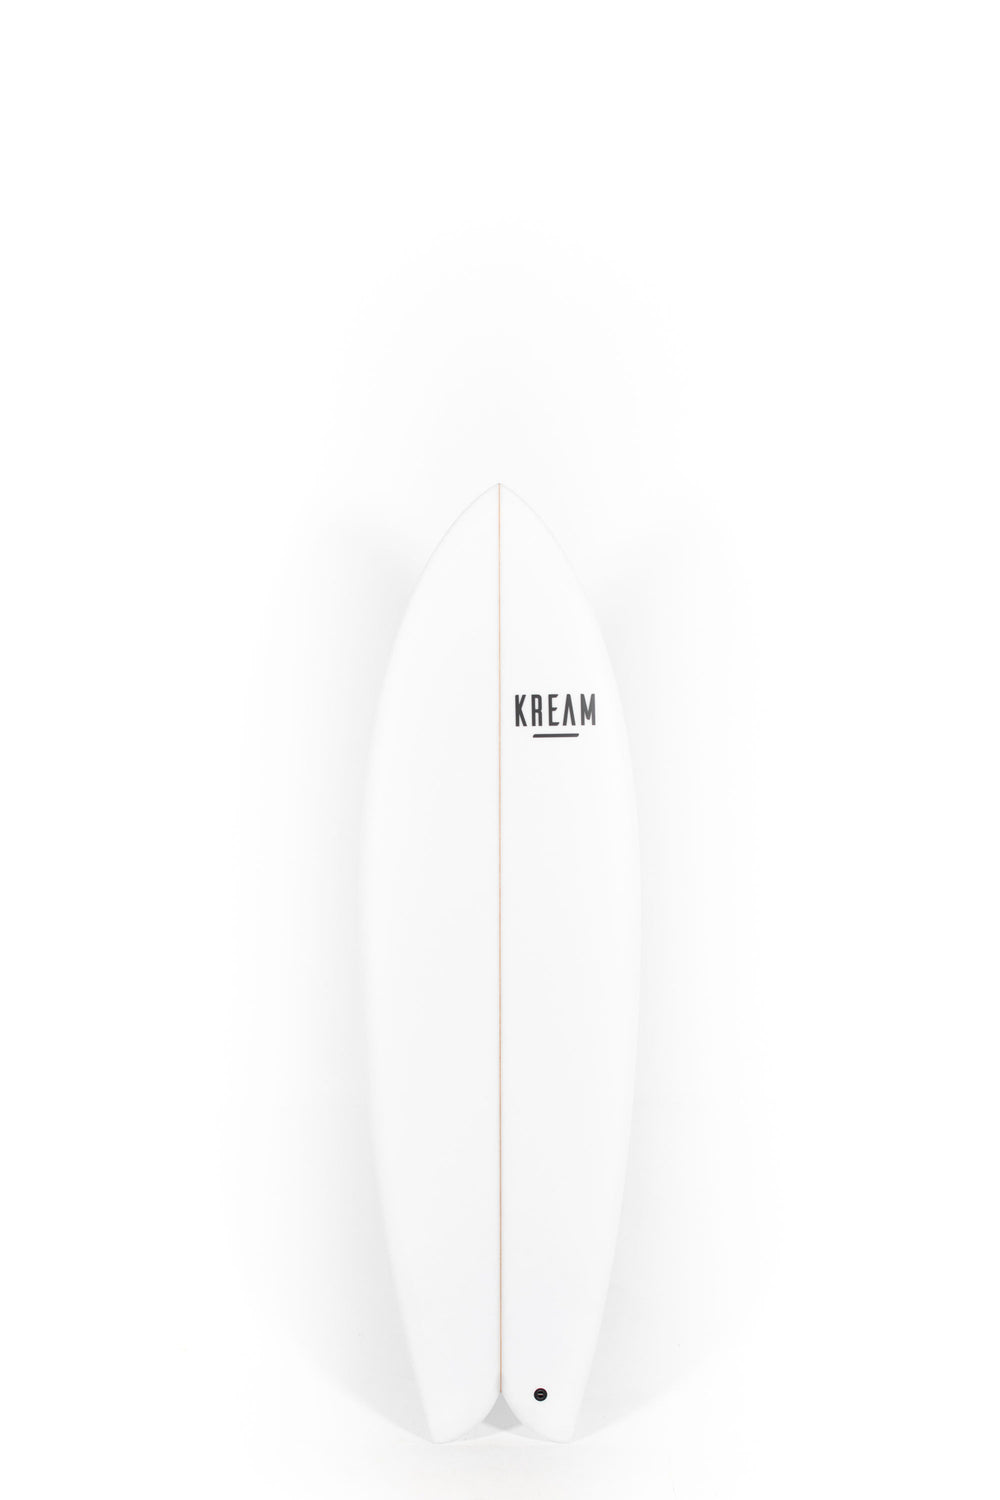 Pukas Surf Shop - Kream Surfboards - FISH - 6'0